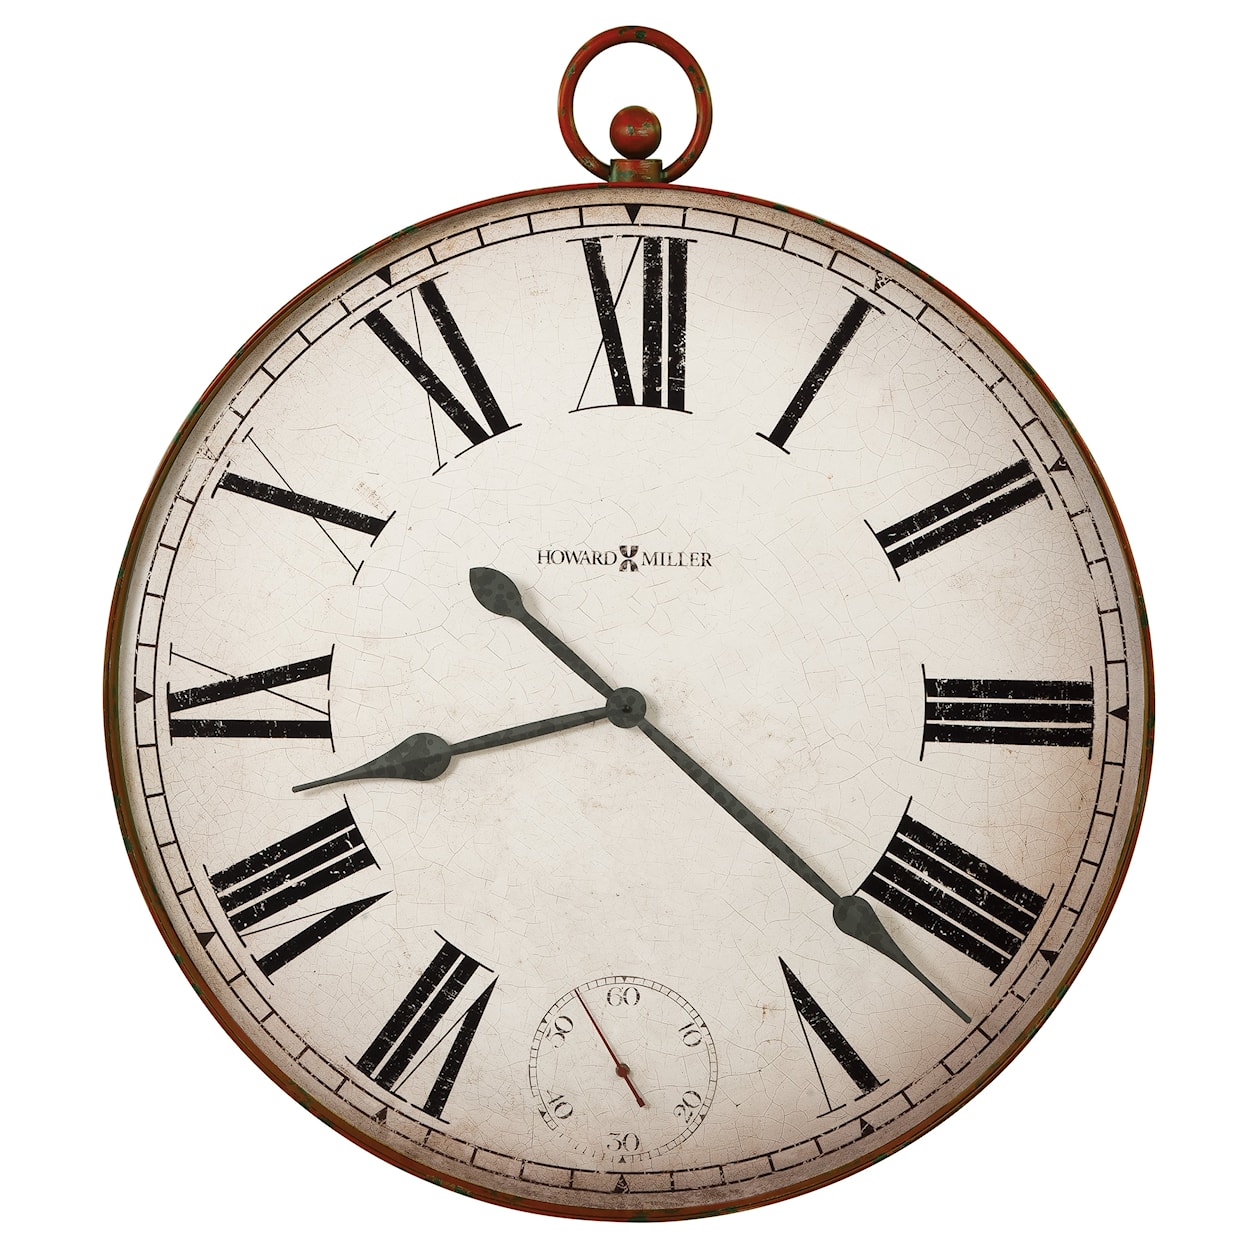 Howard Miller Howard Miller Gallery Pocket Watch II Wall Clock